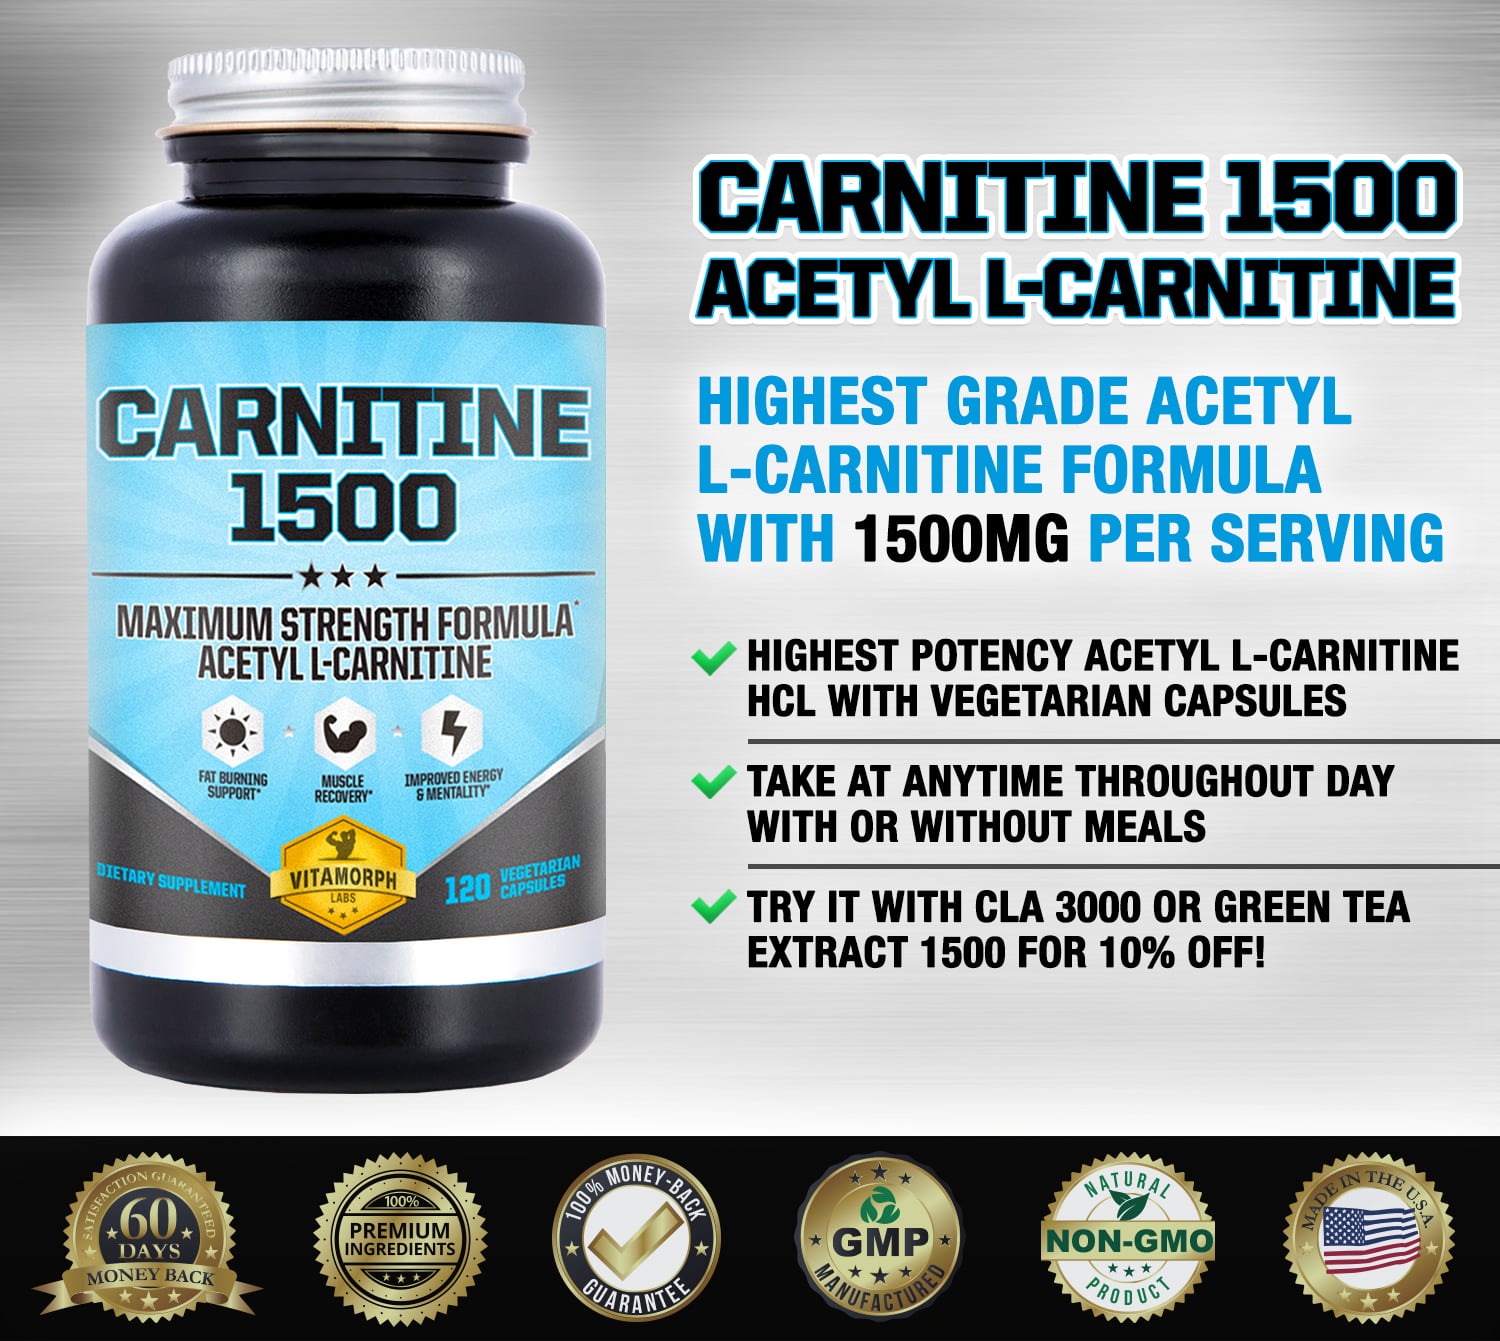 Спортвики телеграм. L Carnitine 1500 MG. Nutriversum Basic l-Carnitine 1500 мг 60 таб. Ацетил л карнитин 1500мг. Acetyl-l Carnitine капсулы.